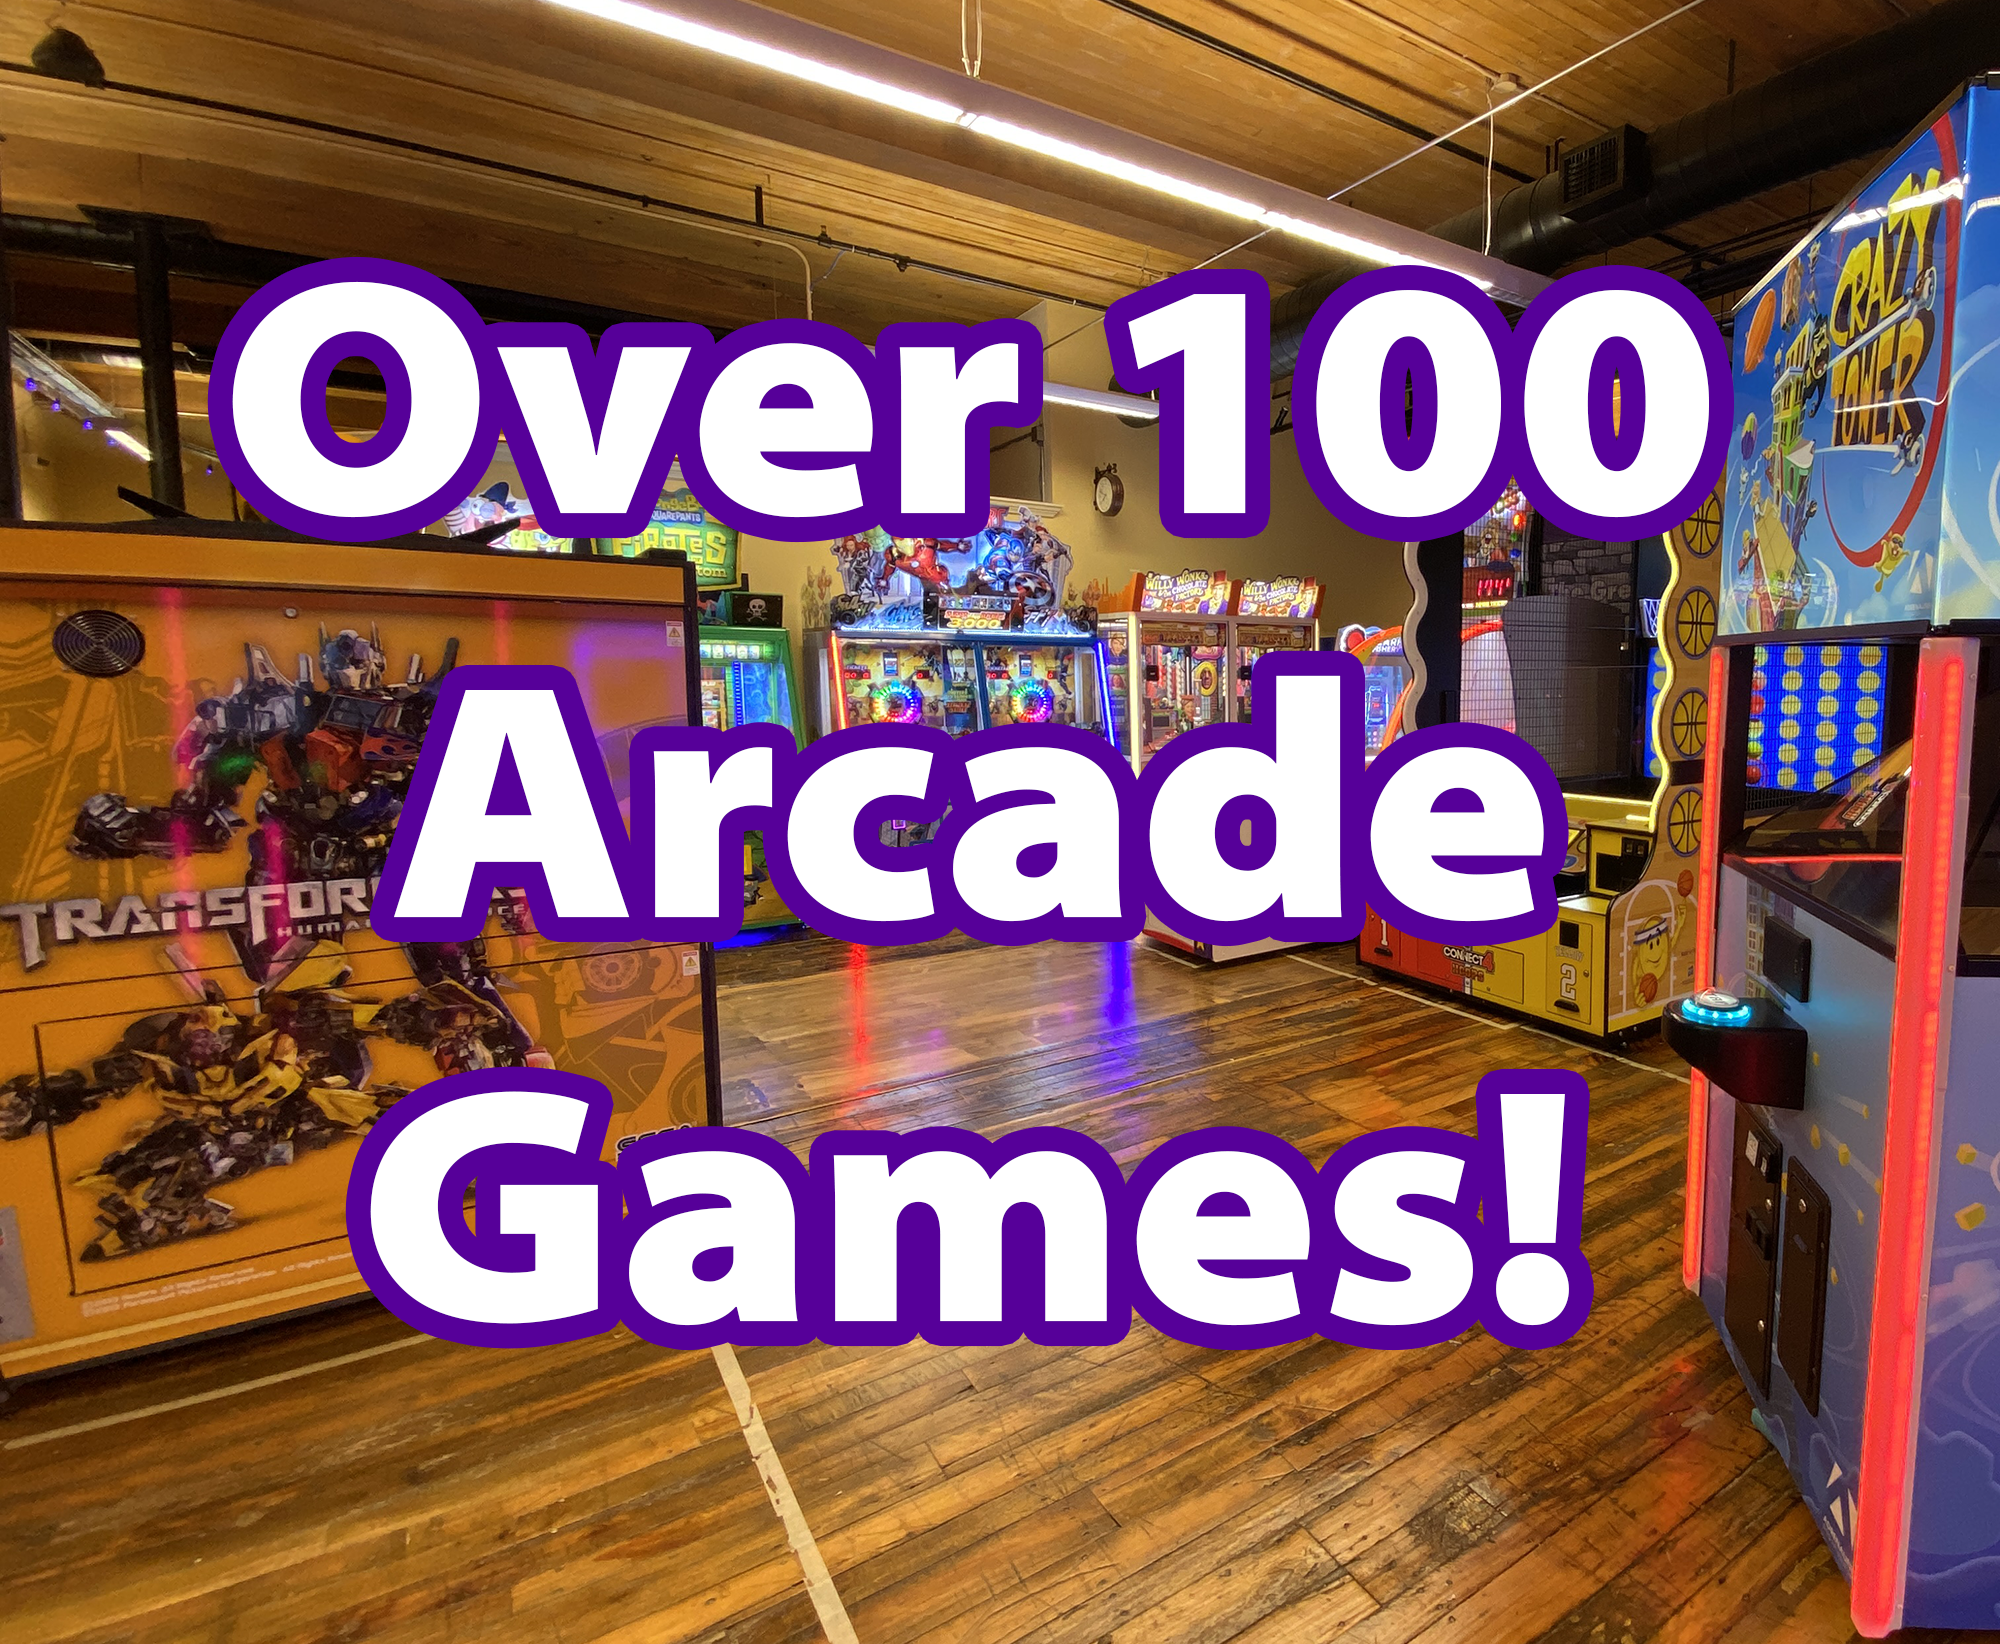 Over 100 arcade games